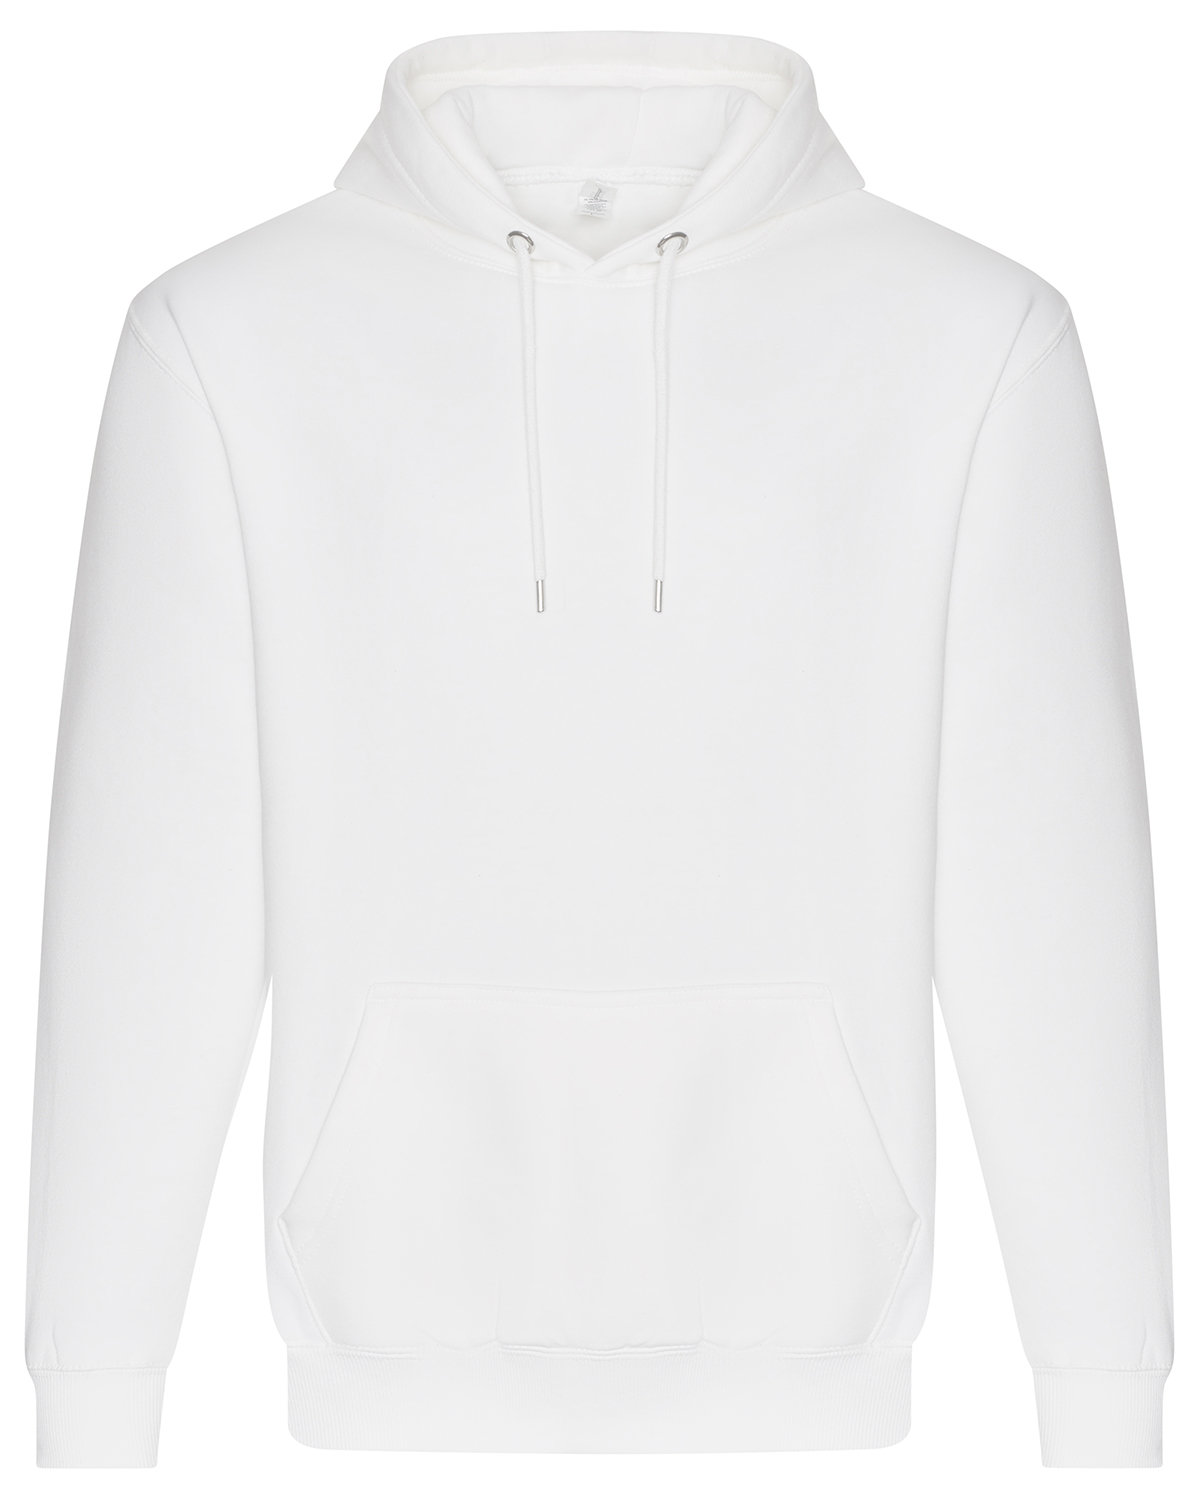 Unisex Urban Heavyweight Hooded Sweatshirt-Just Hoods By AWDis